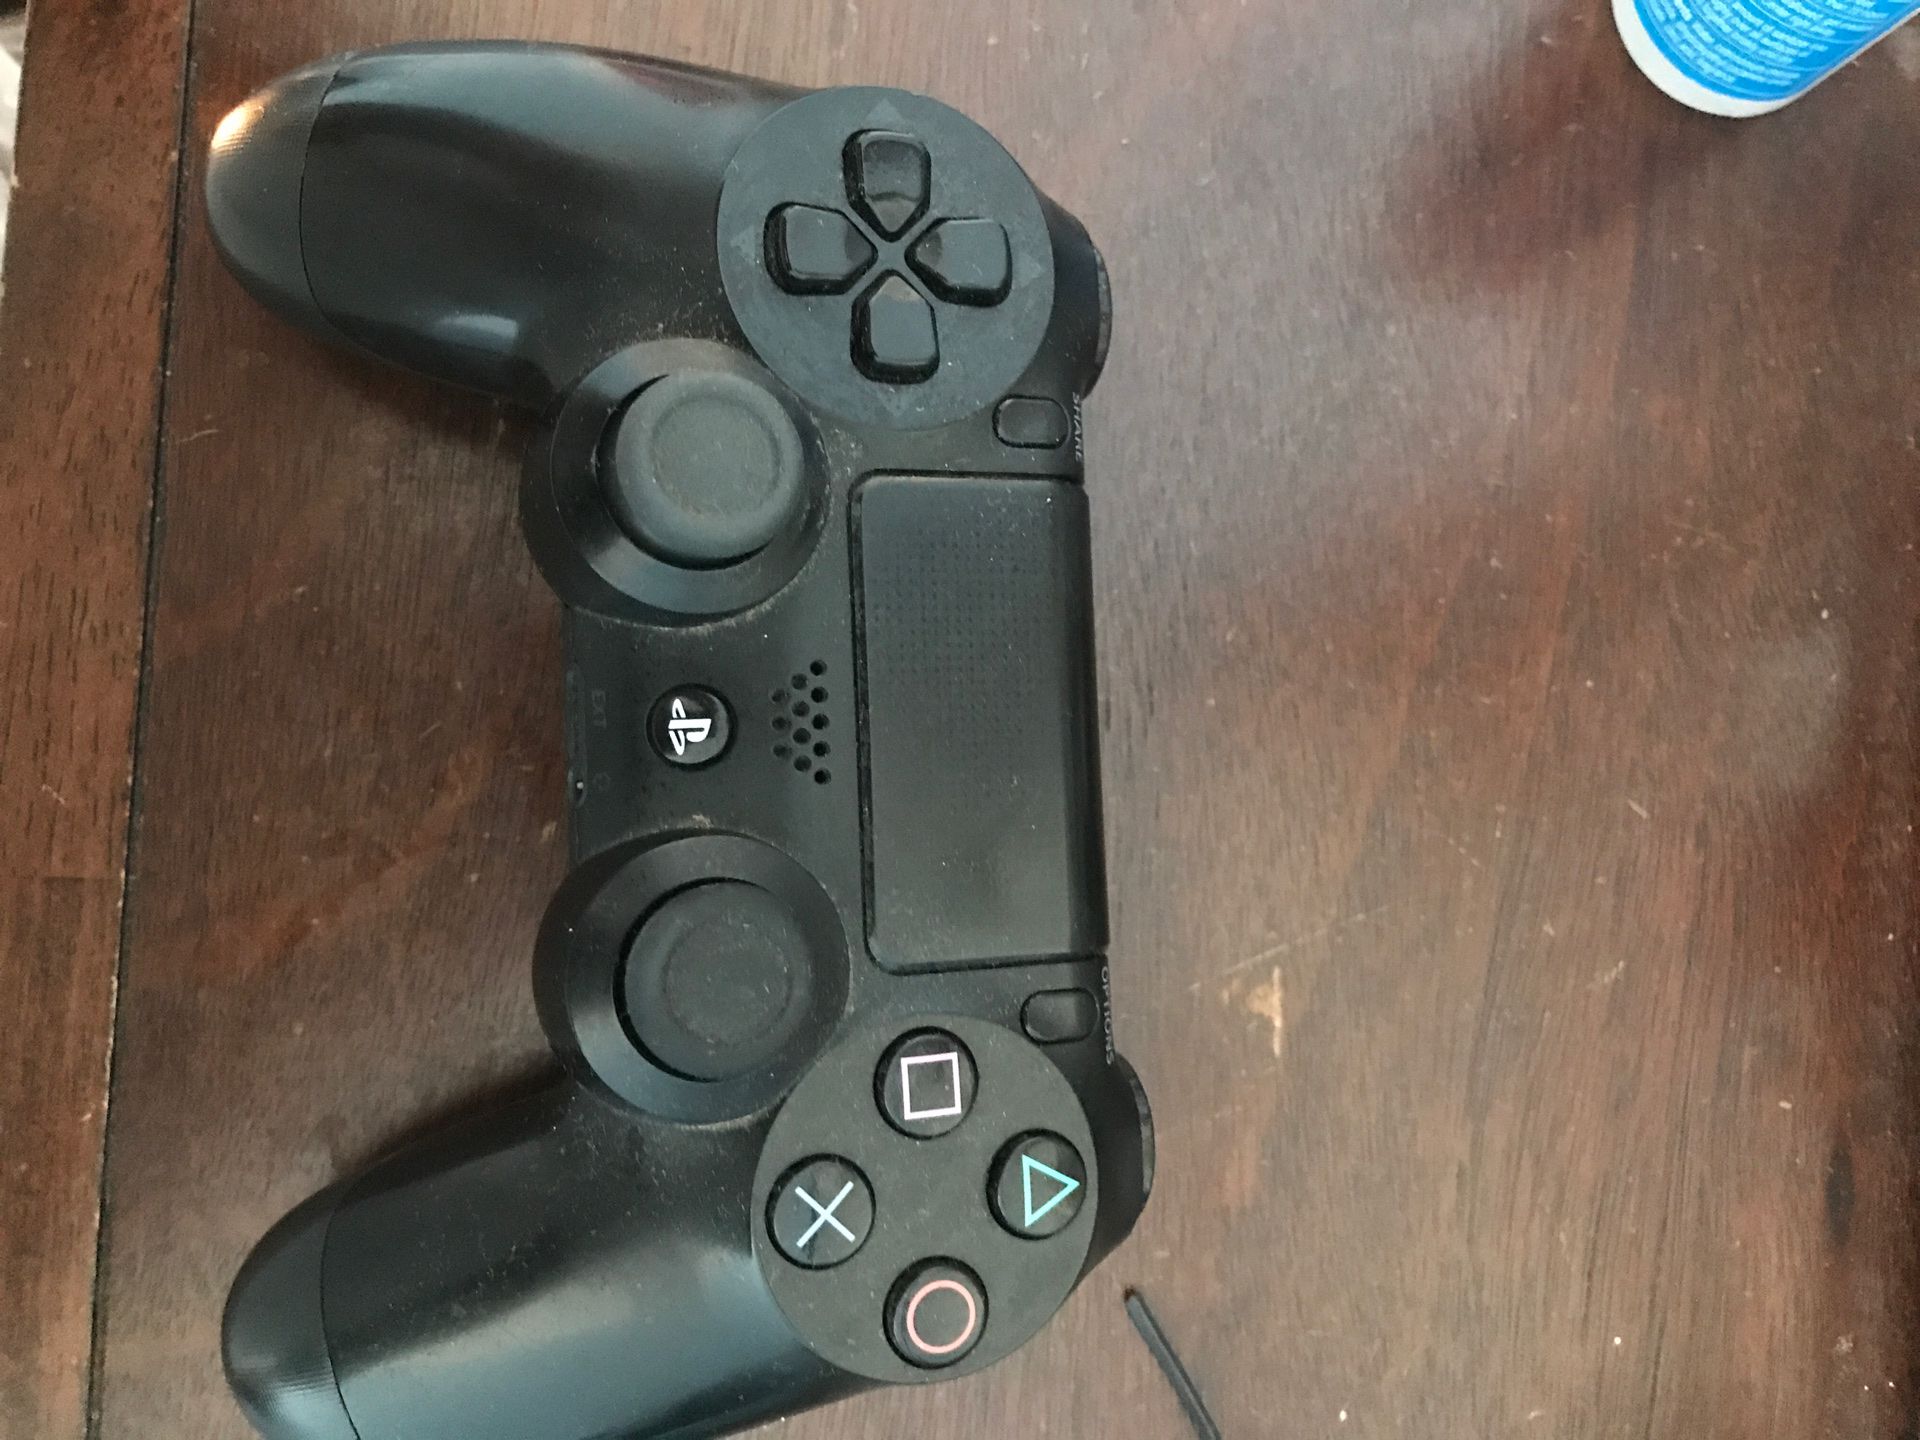 Broken PS4 controller